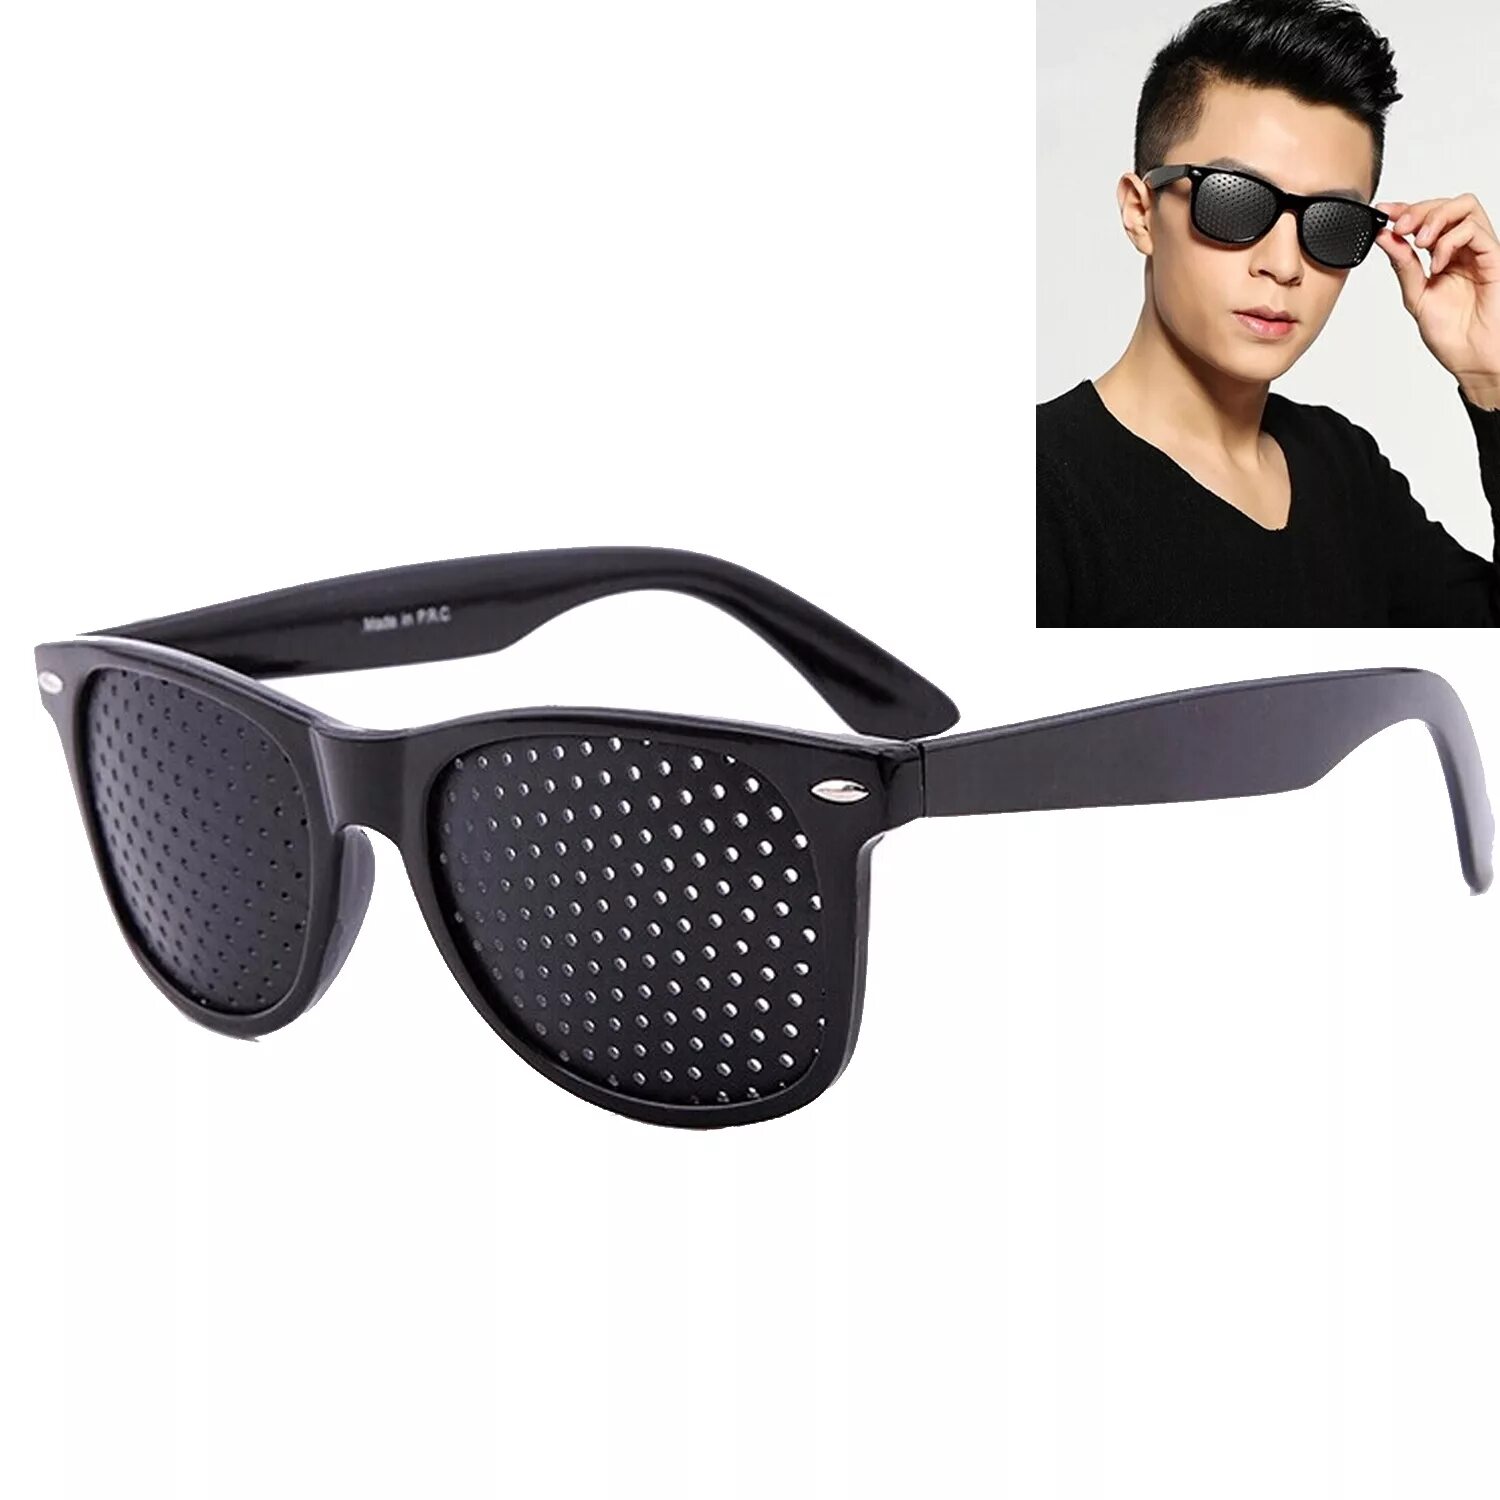 Mr 8858 c1 очки. Очки солнцезащитные Fendi occhiali. Pinhole очки. Очки с отверстиями.